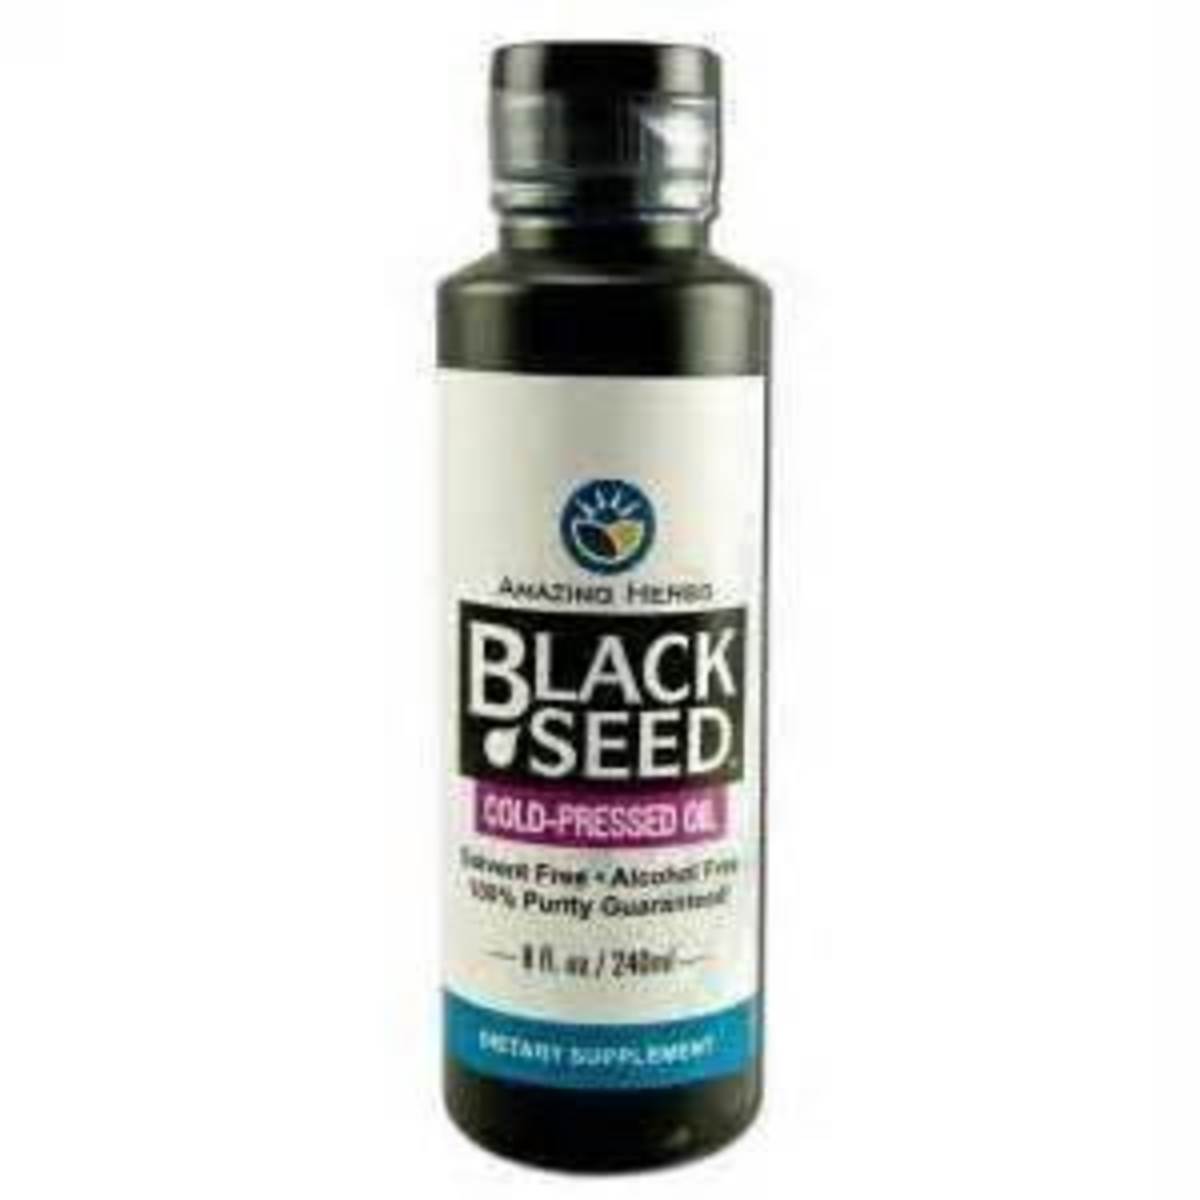 My bottle of black seed oil